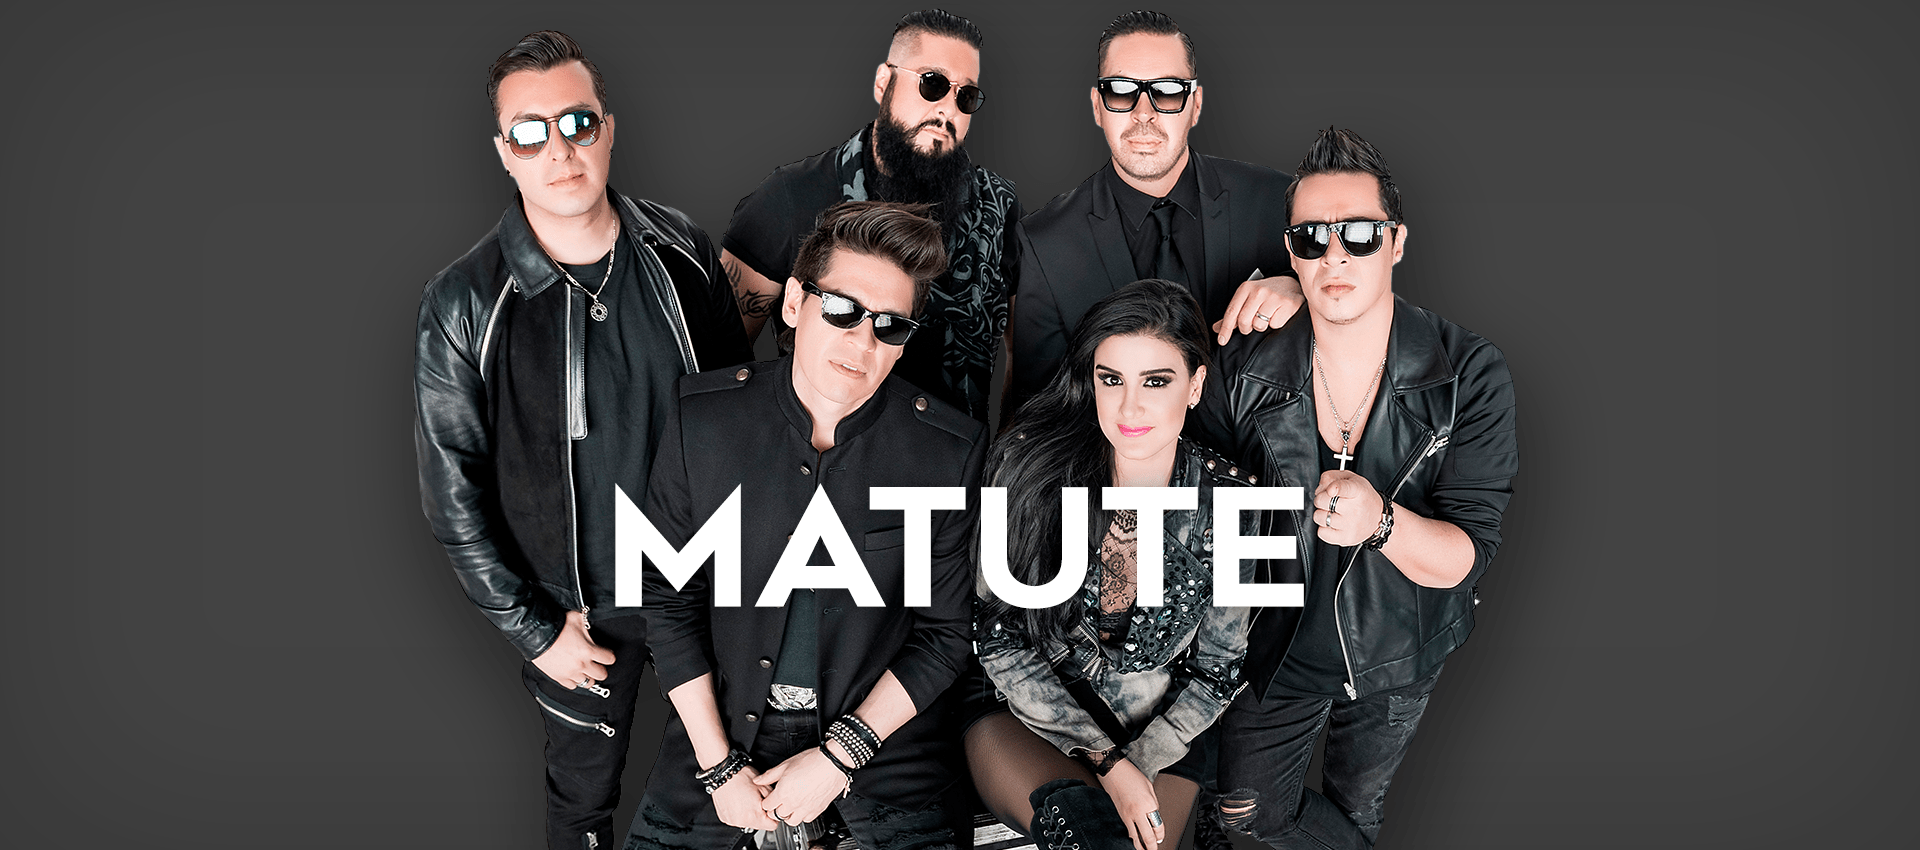 MATUTE Regresa A La Arena CDMX Para Presentar Su “Planeta Retro Tour